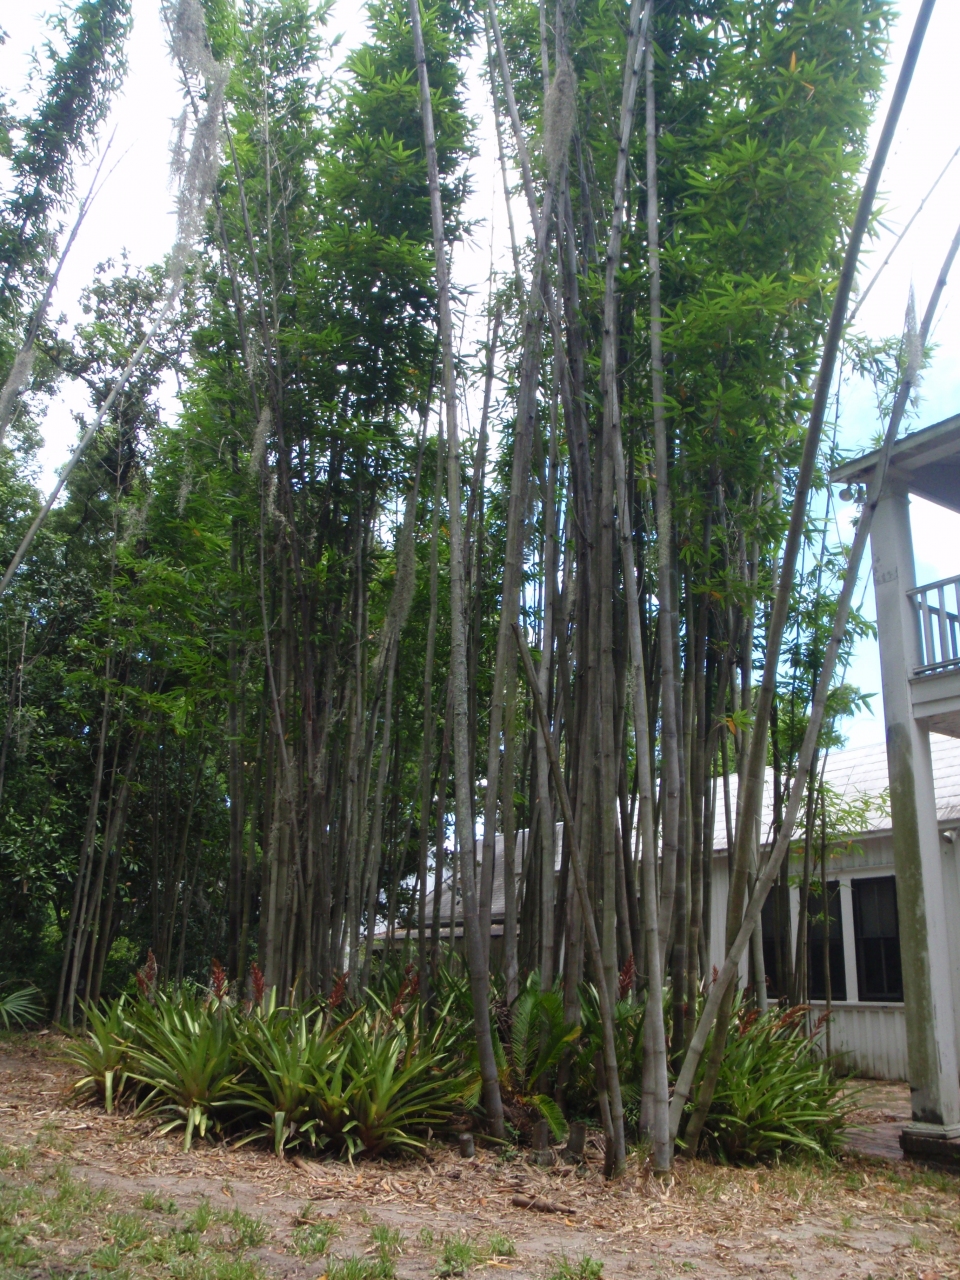 Bambusa oldhamii